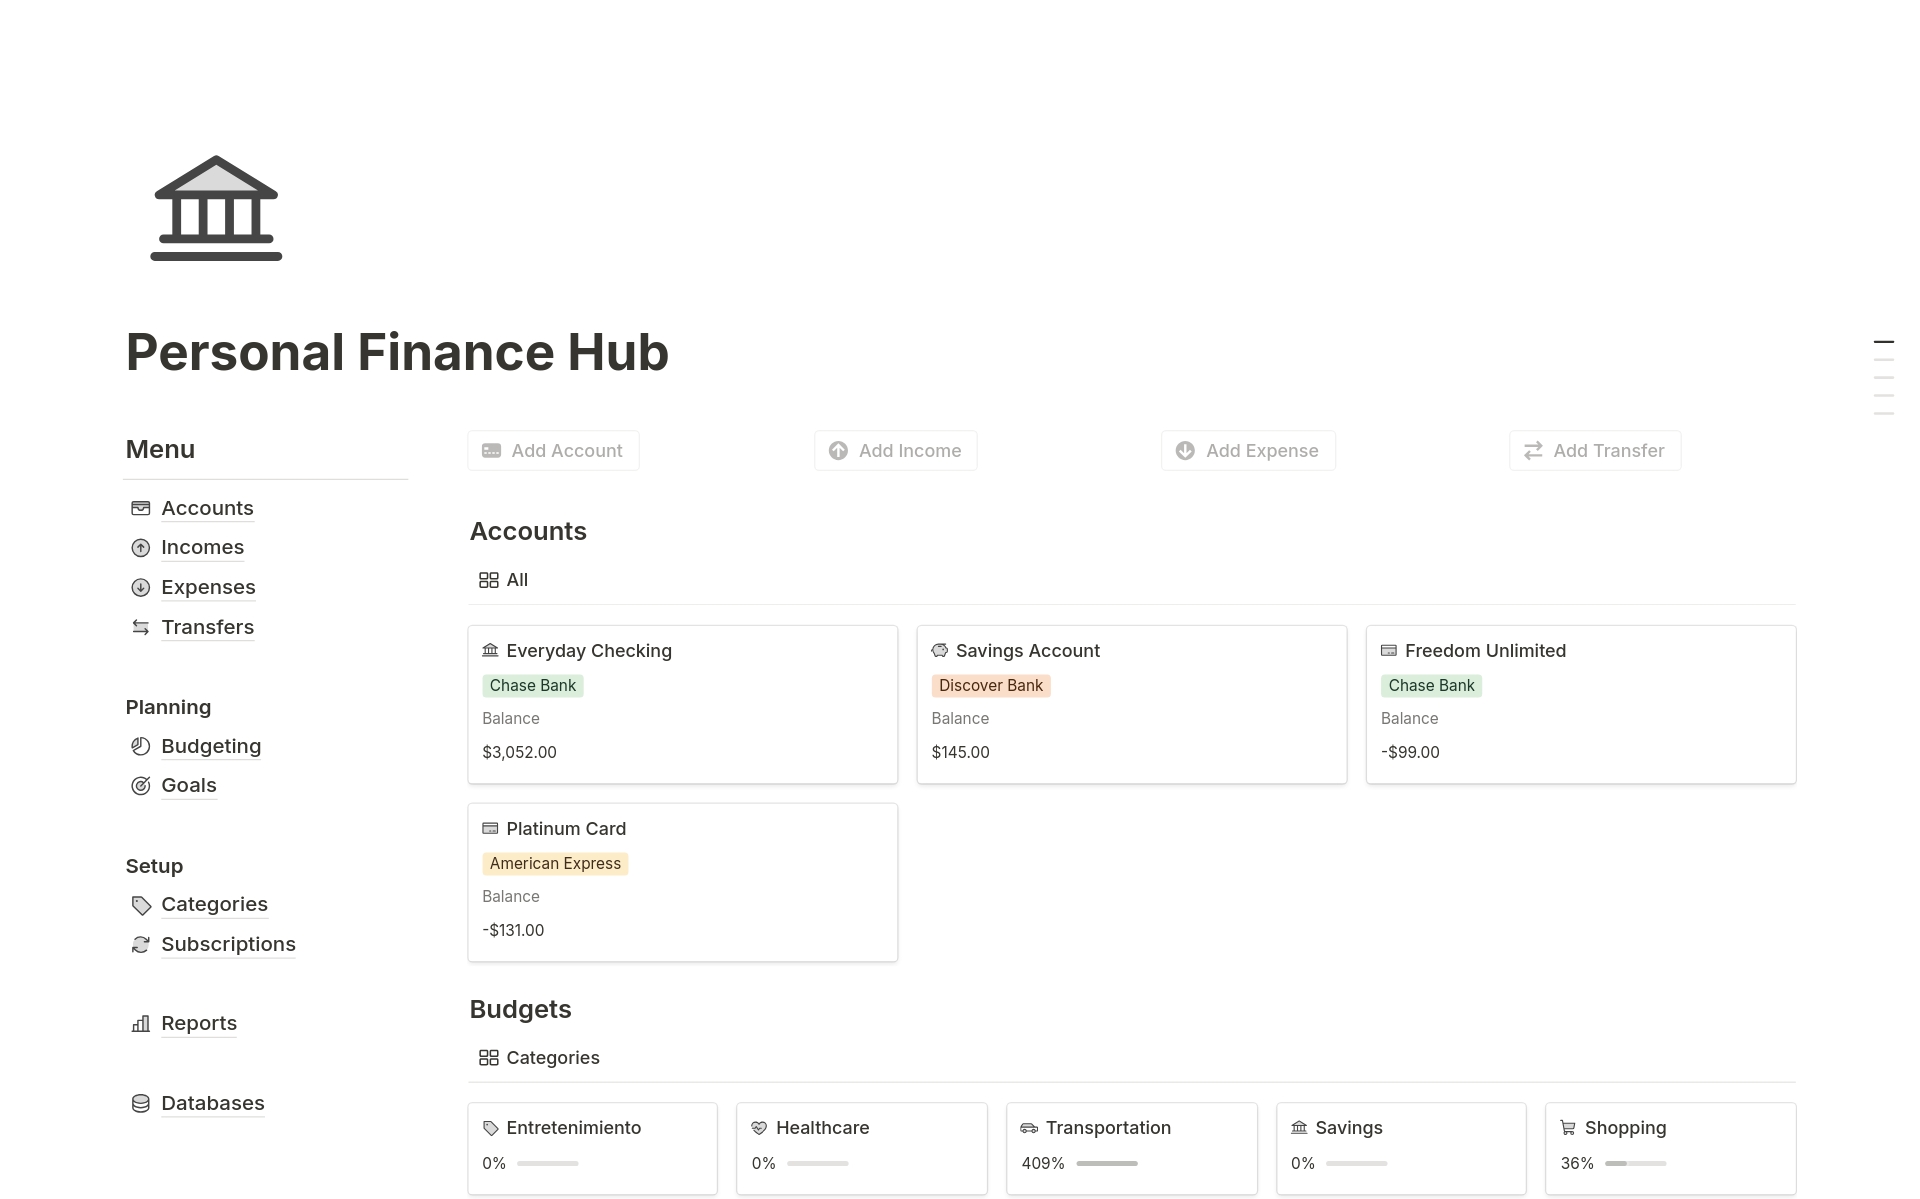 Vista previa de una plantilla para Personal Finance Hub